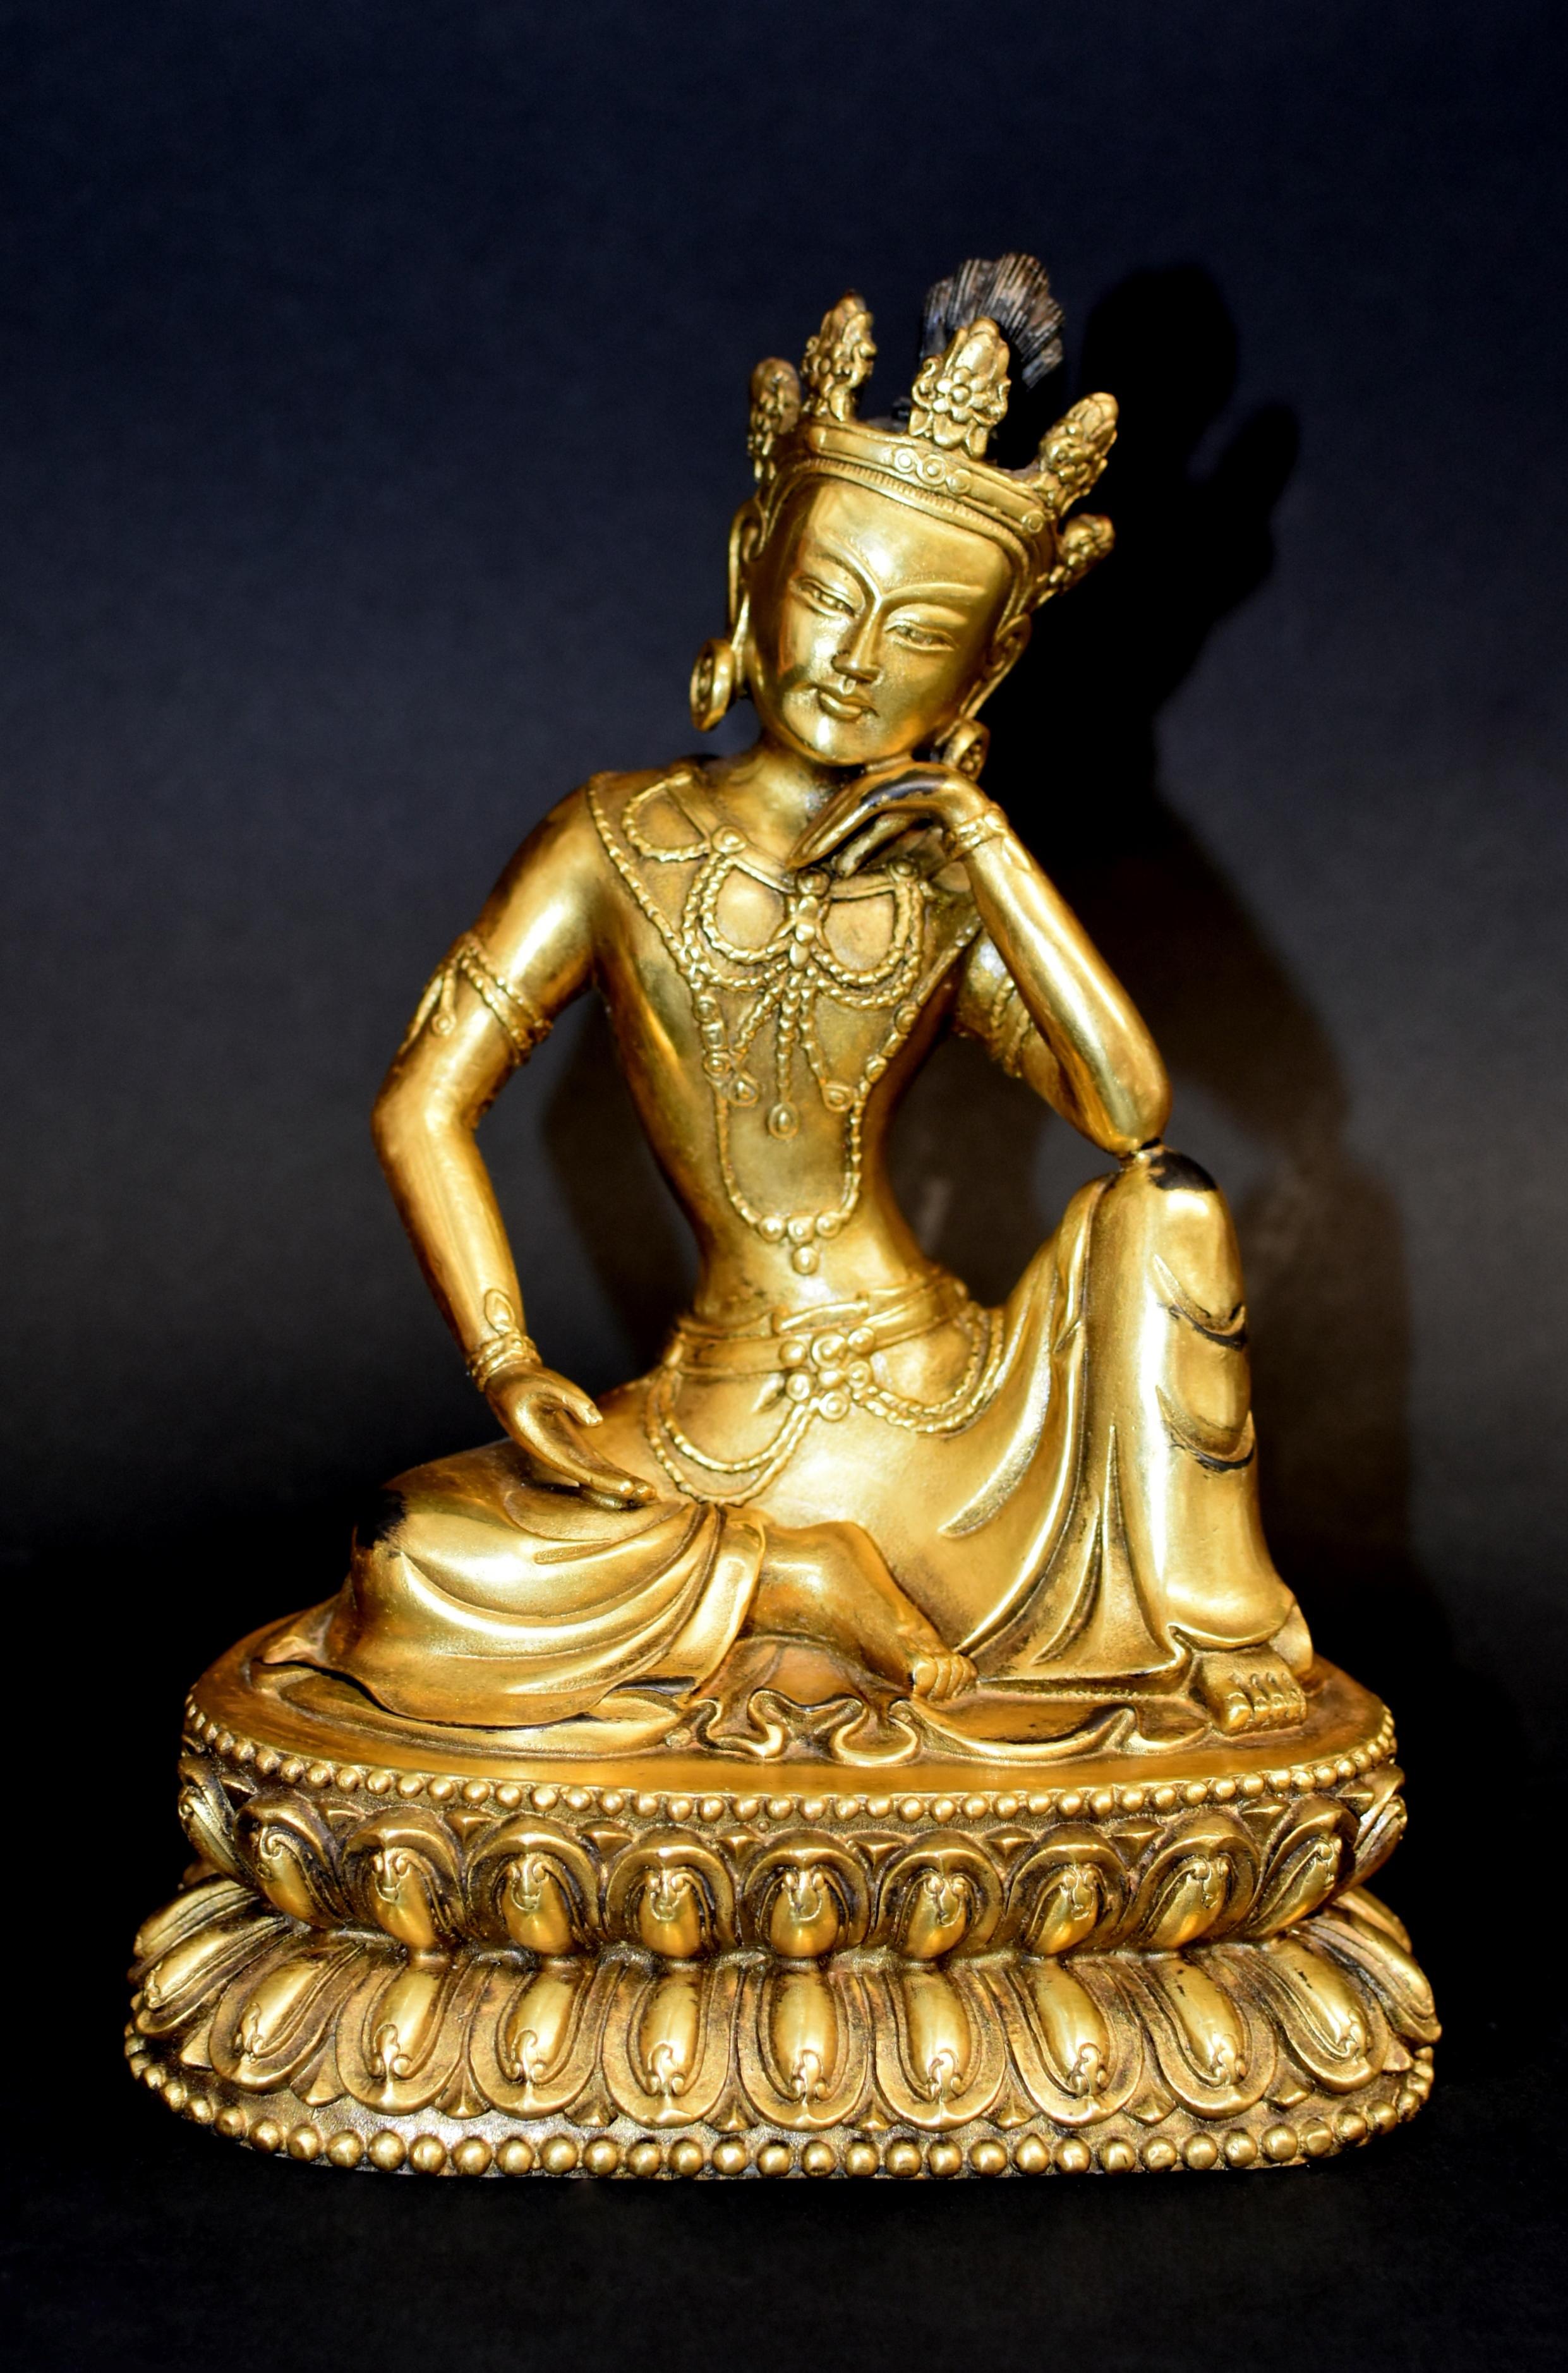 A magnificent gilt bronze statue of Tibetan Avalokiteshvara, the compassionate Bodhisattva Water Moon Guan Yin. Seated on a lotus base in rajalilasana, the 